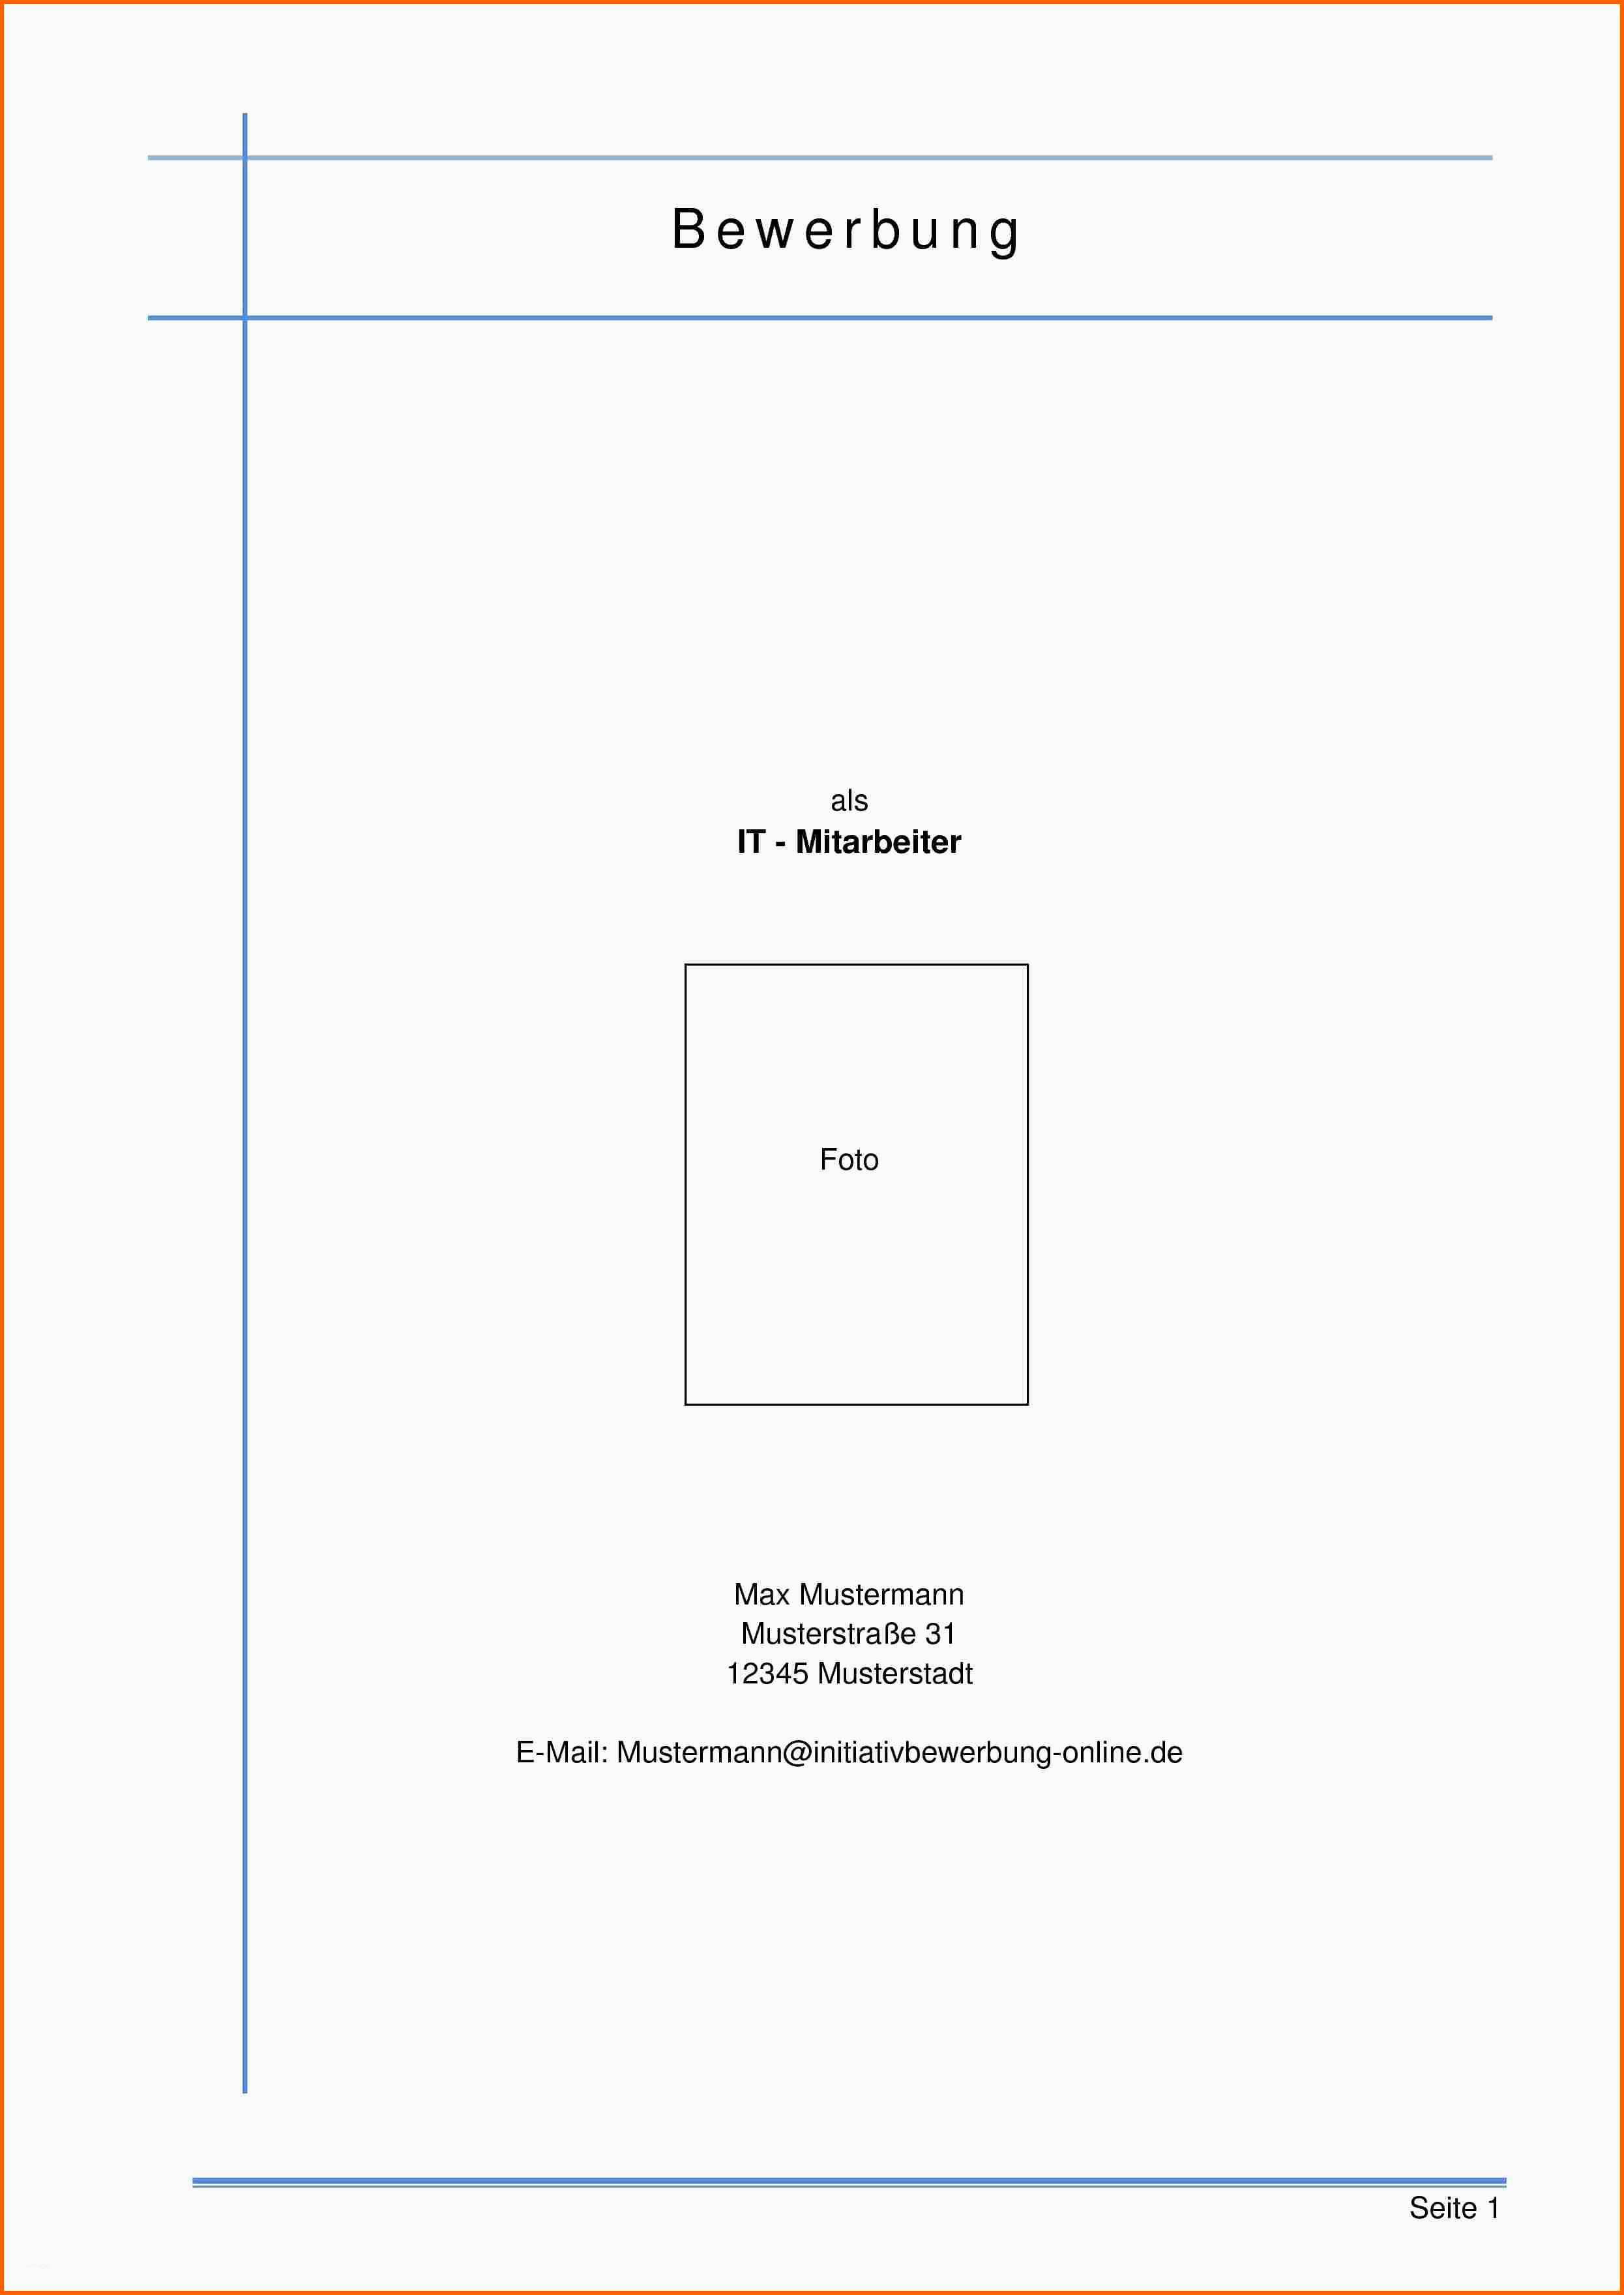 deckblatt bewerbung pdf resignation format 3